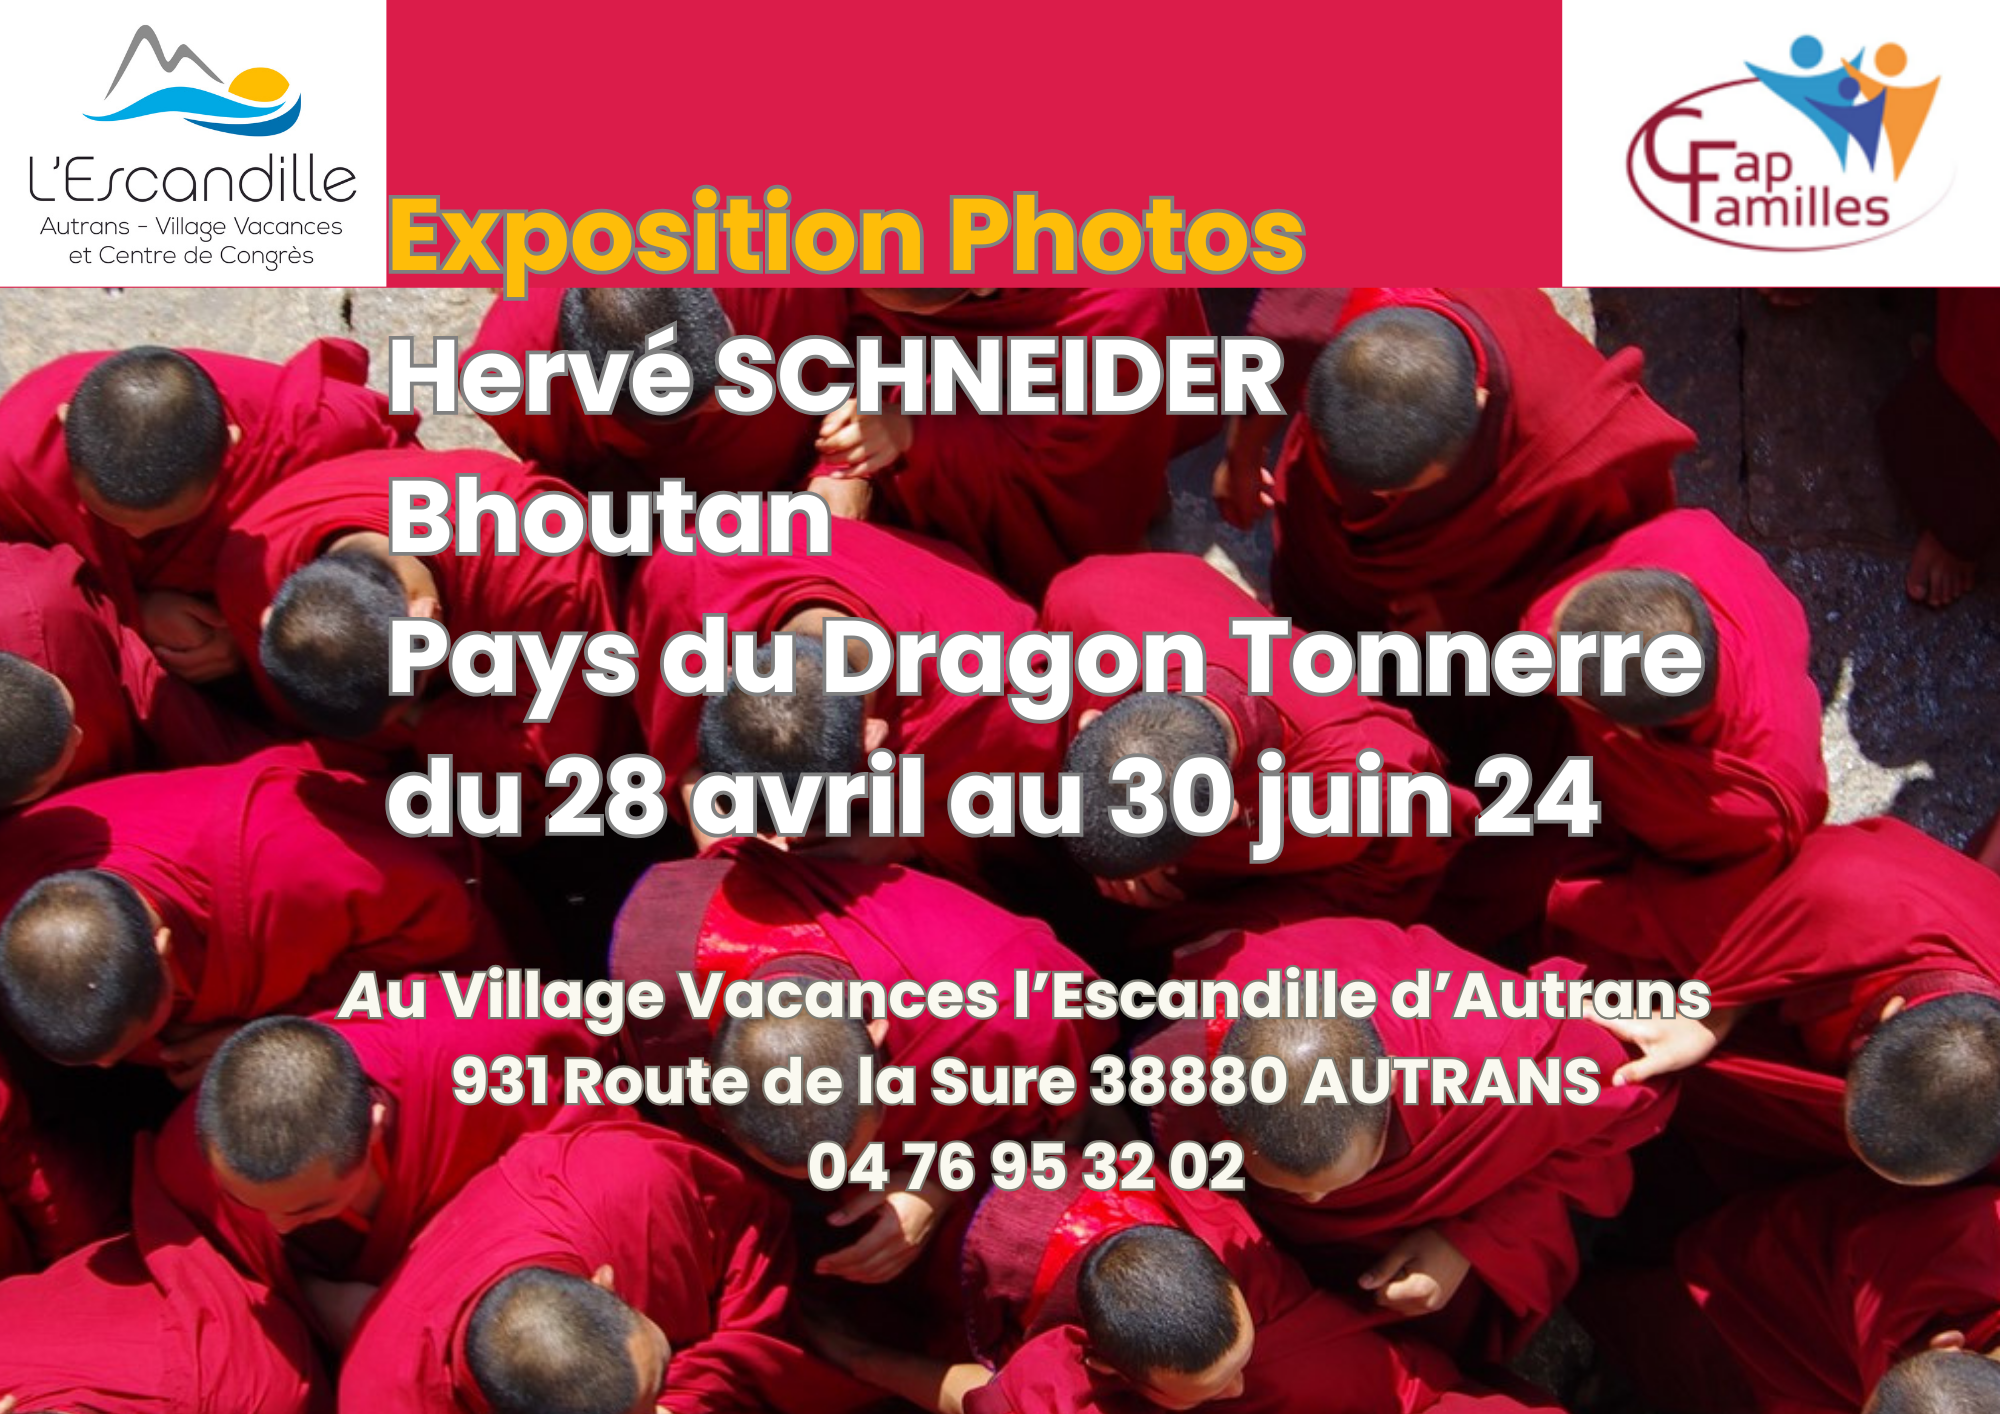 Exposition "Bhoutan - pays du Dragon Tonnerre" par Hervé Schneider